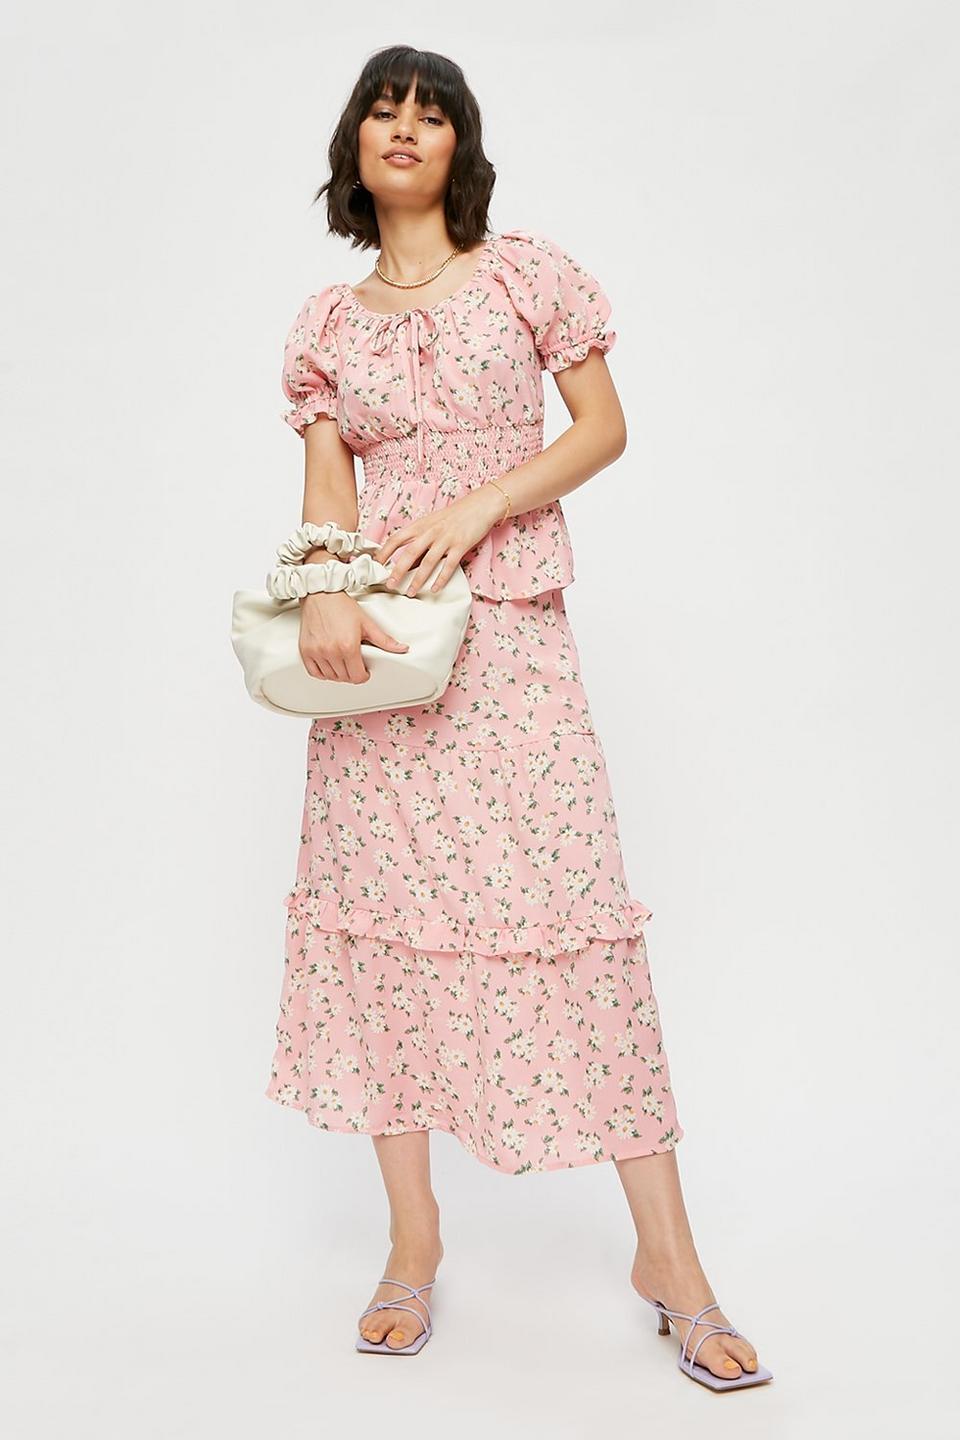 Tops | Petite Pink Daisy Short Sleeve Gypsy Top | Dorothy Perkins